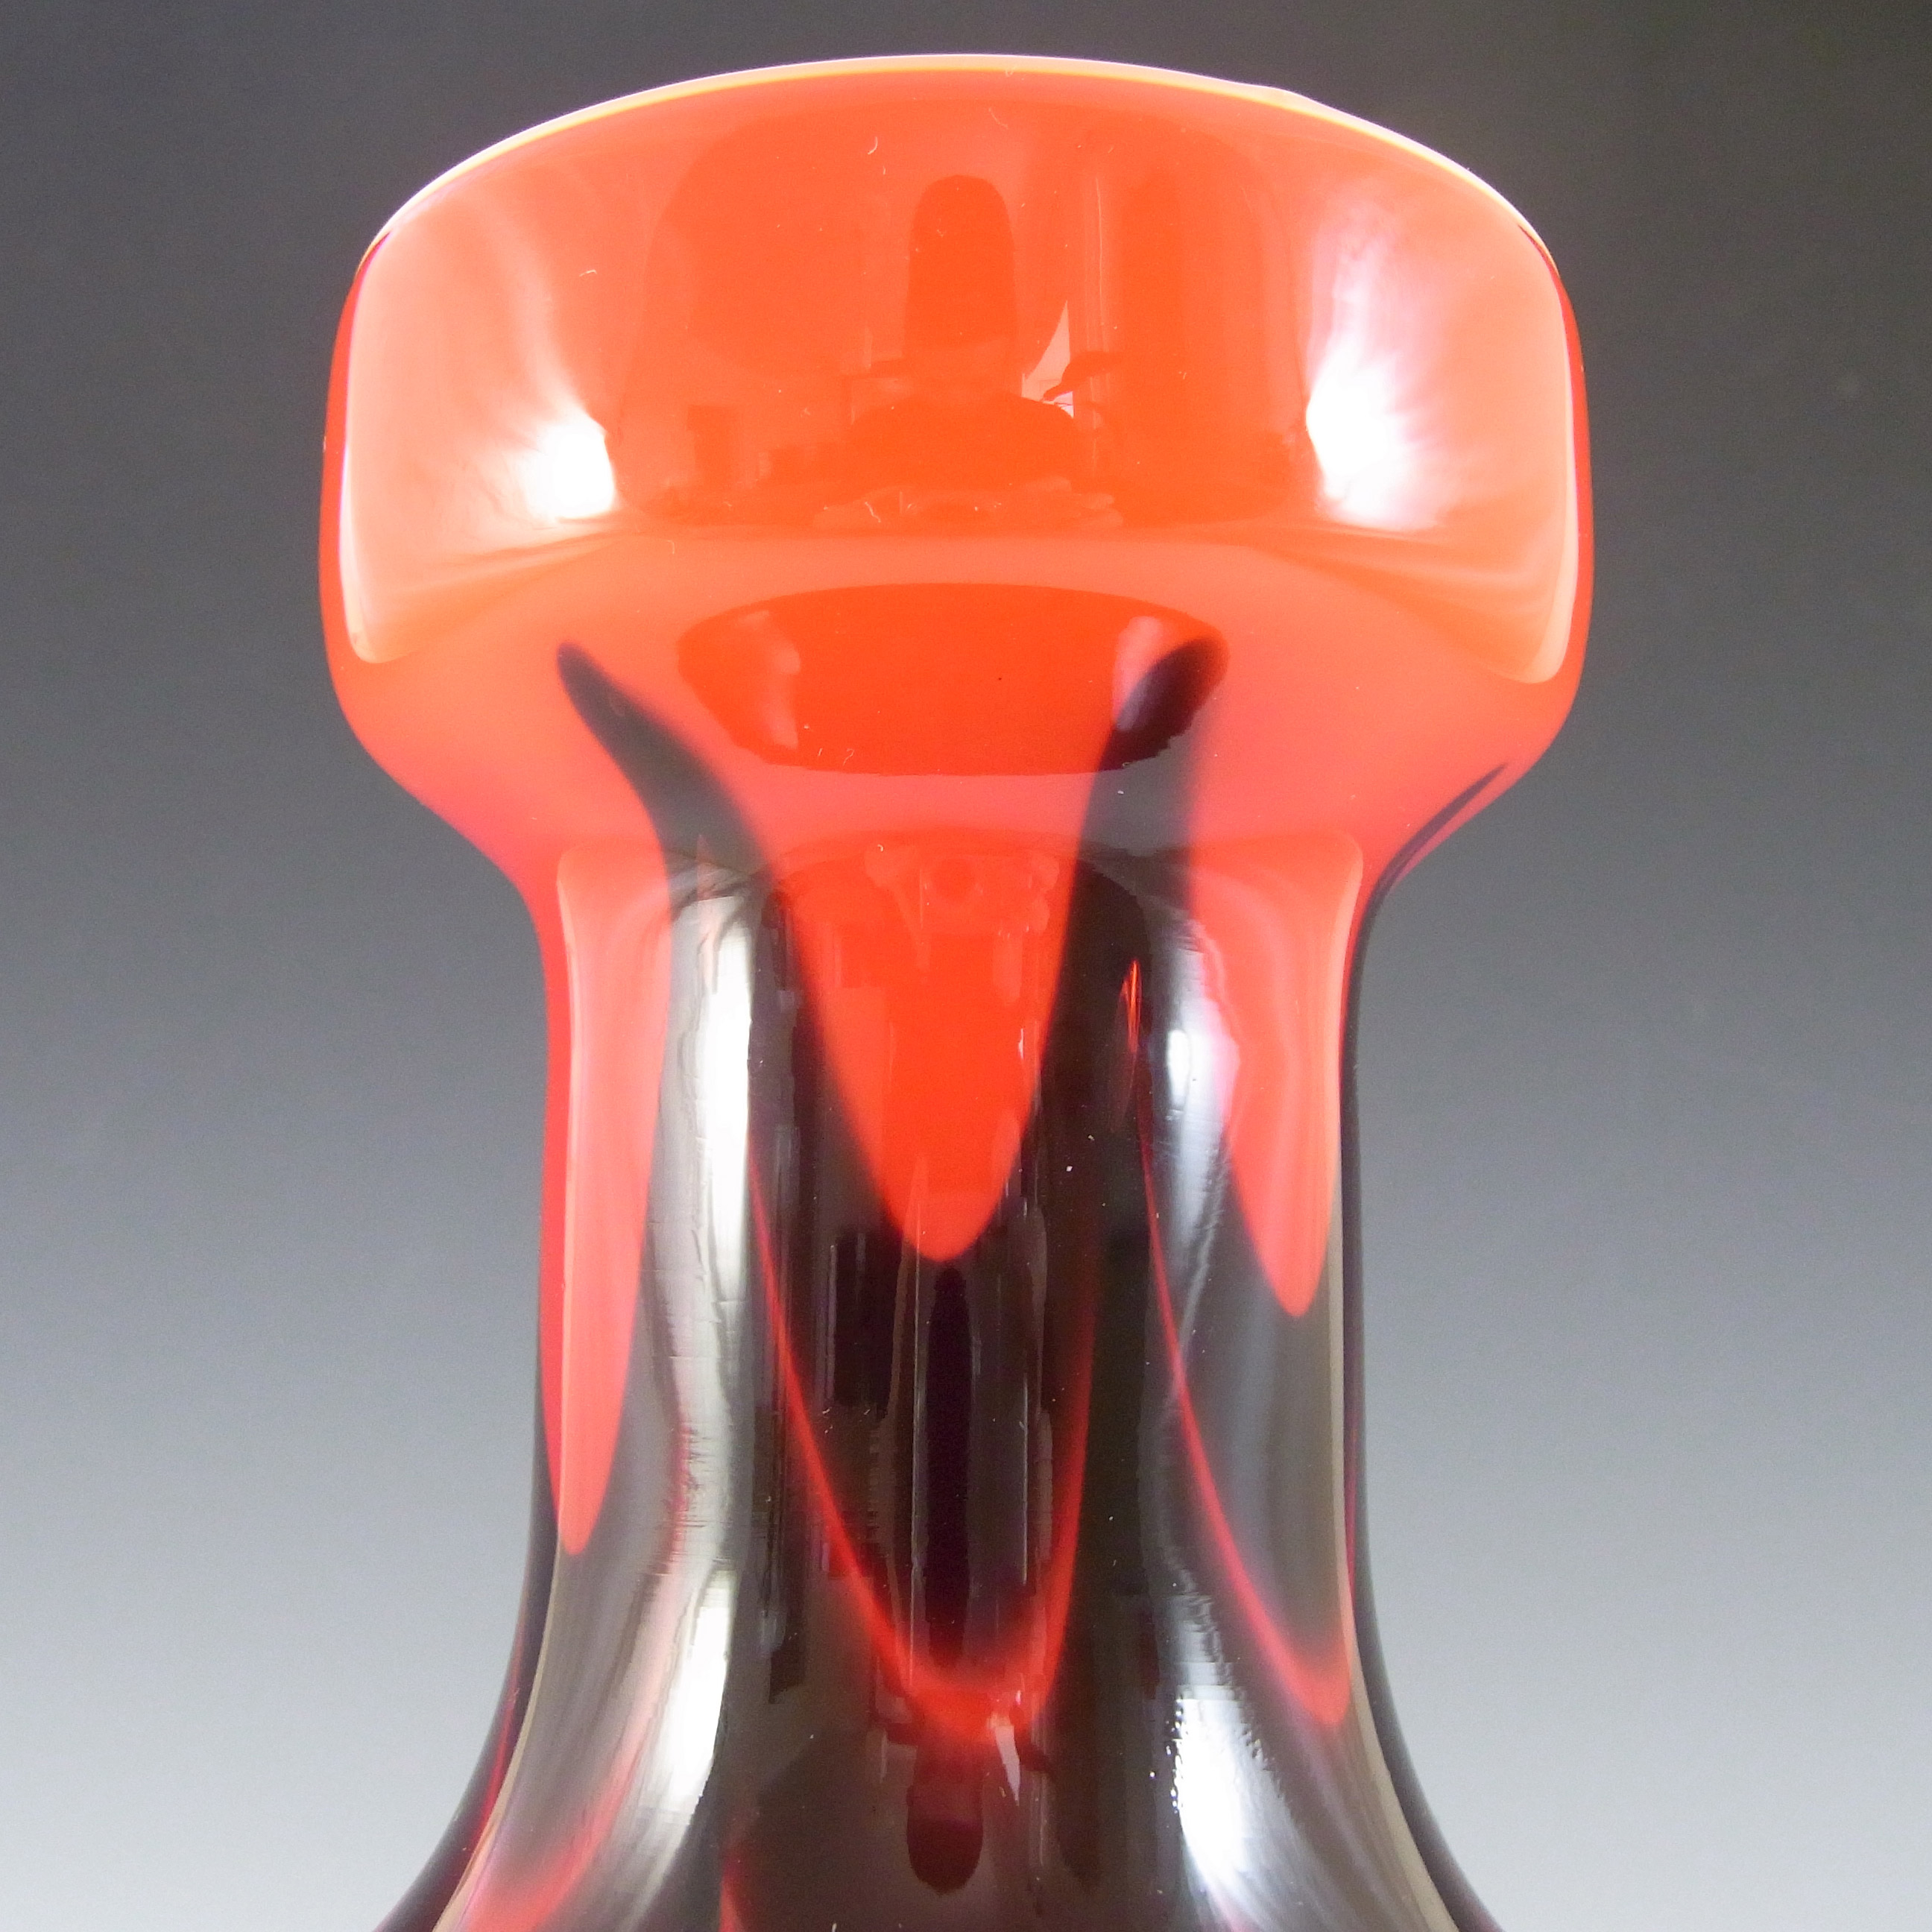 V.B. Opaline Florence Empoli Marbled Red & Black Glass Vase - Click Image to Close